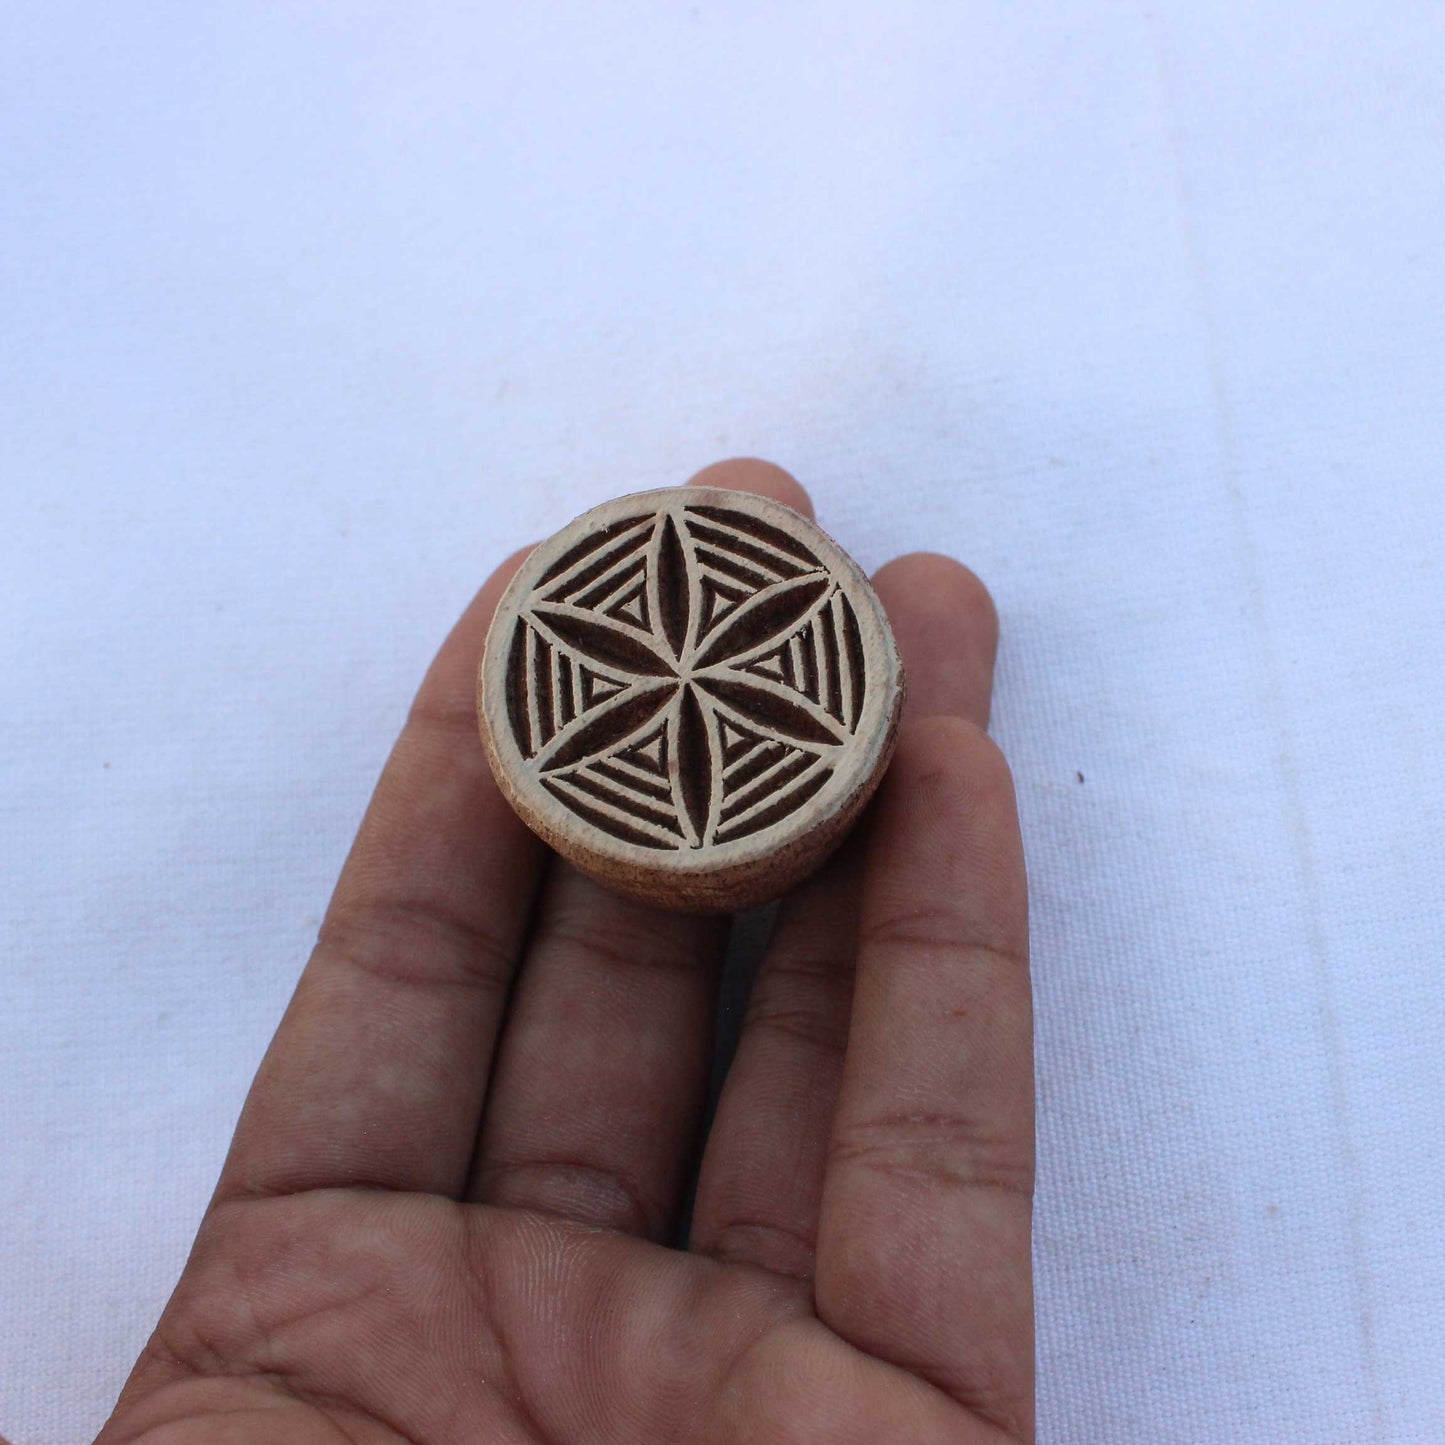 Flower Wood Block Stamp Mandala Stamp Carve Wooden Stamp Indian Wood Block Stamp For Printing Henna Design Soap Making Stamp Circle Textile